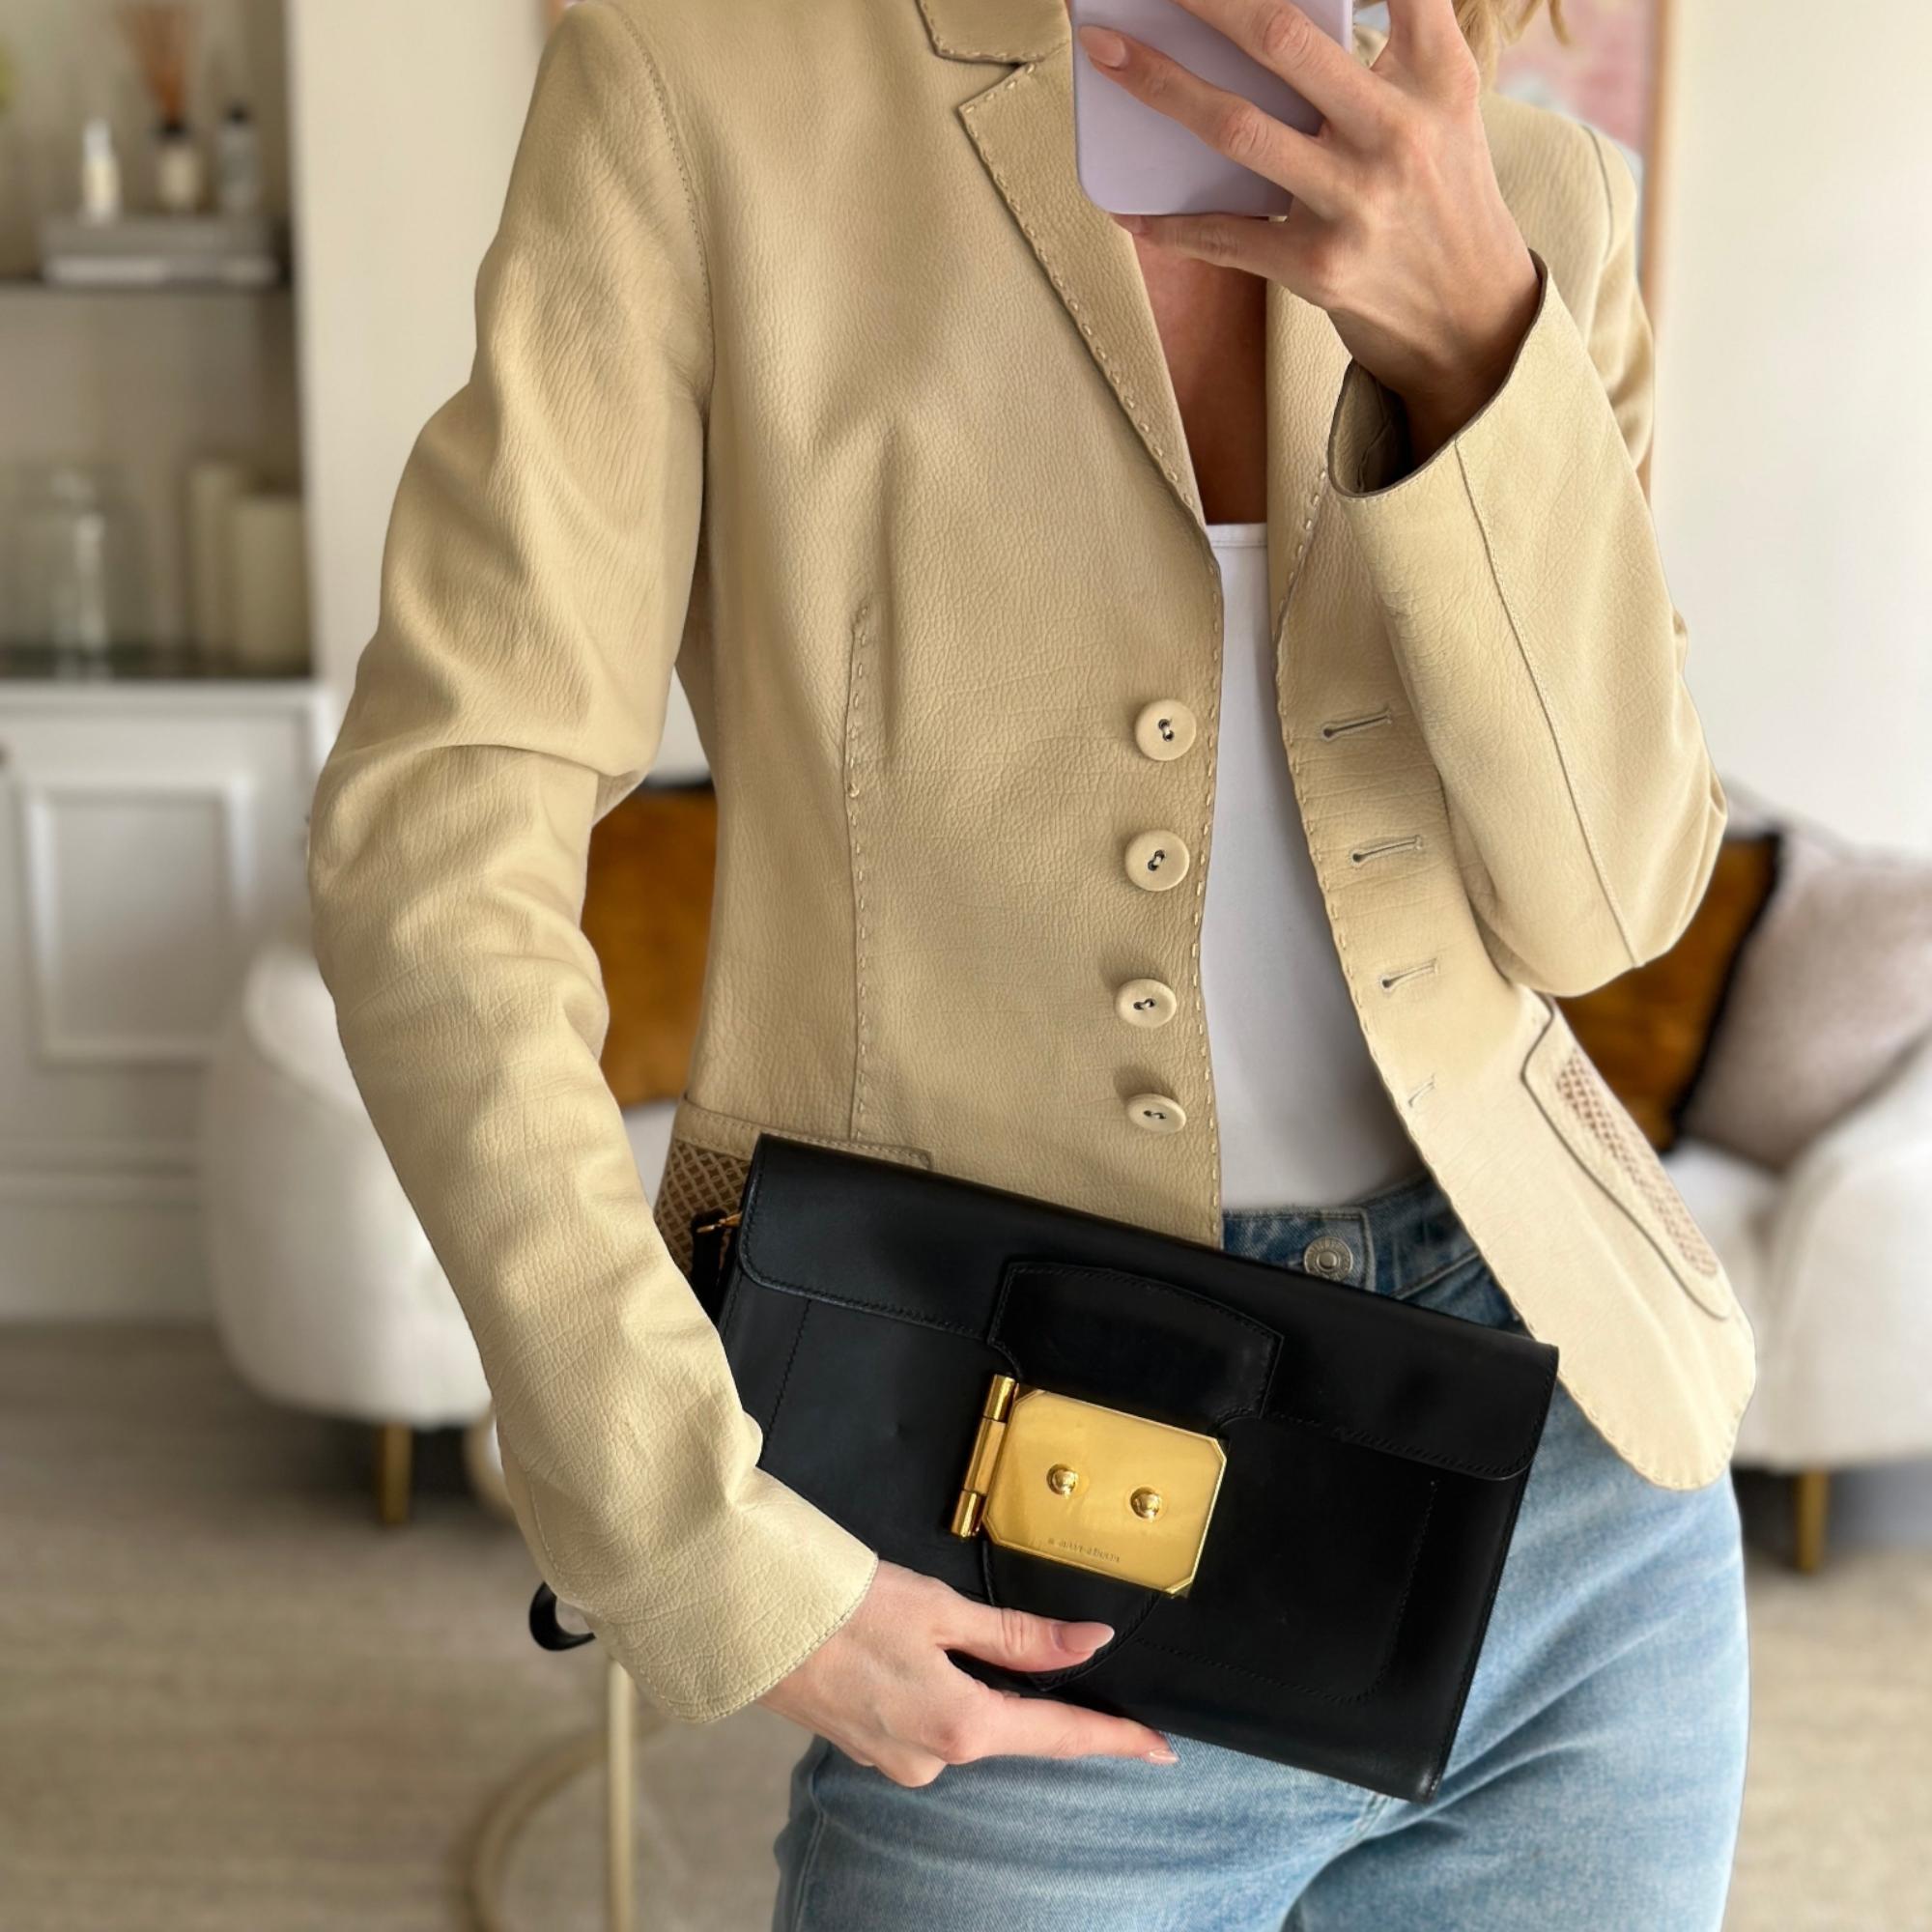 Hermes Goodluck Clutch Bag In Tadelakt Leather With Gold Hardware